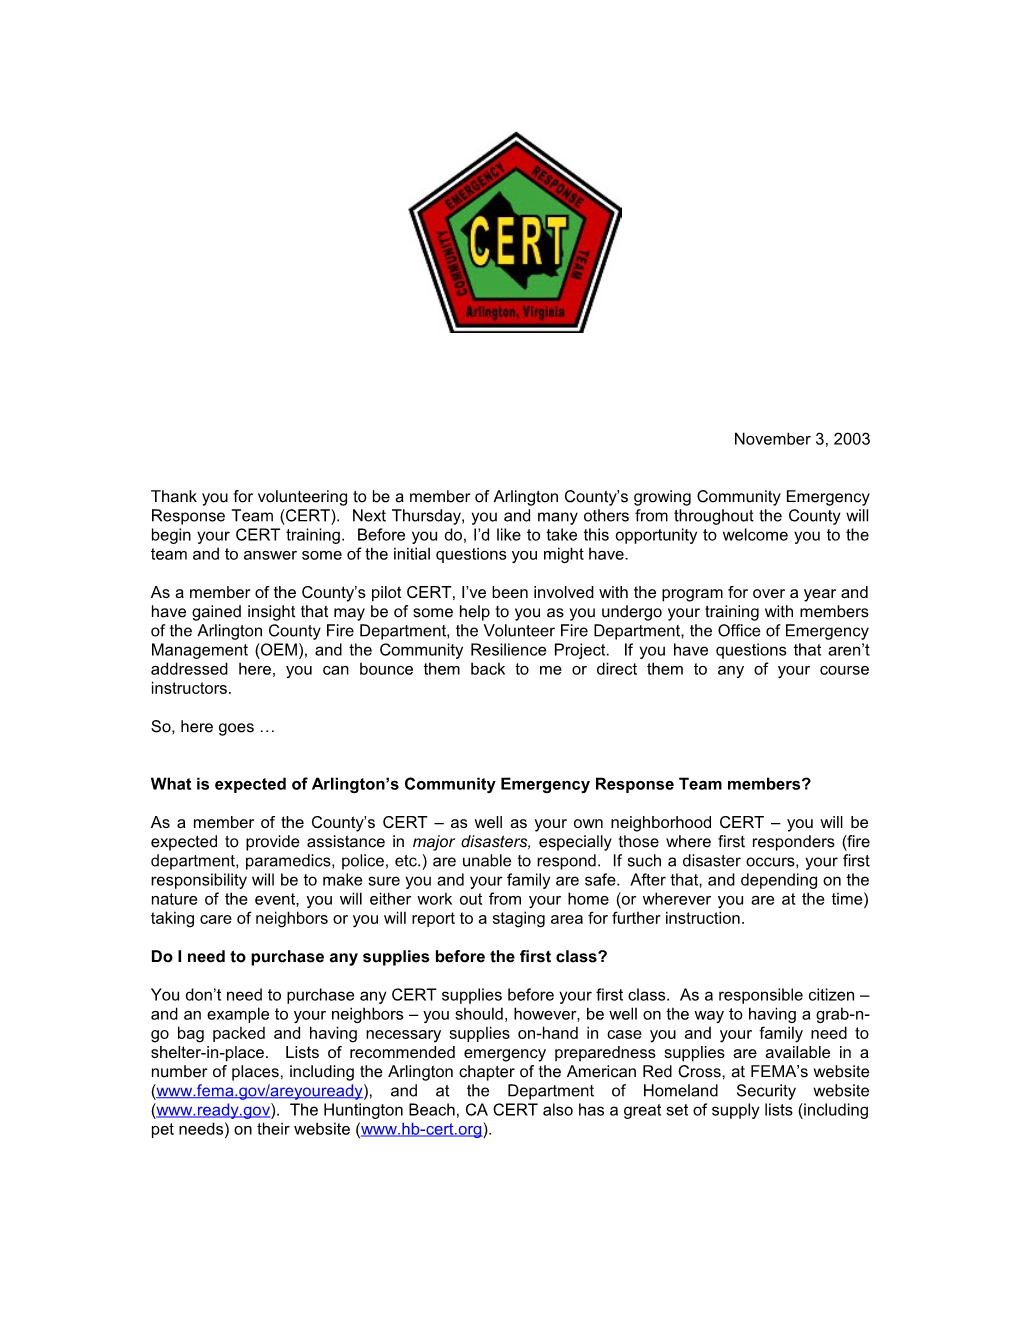 What Is Expected of Arlington S Community Emergency Response Team Members?